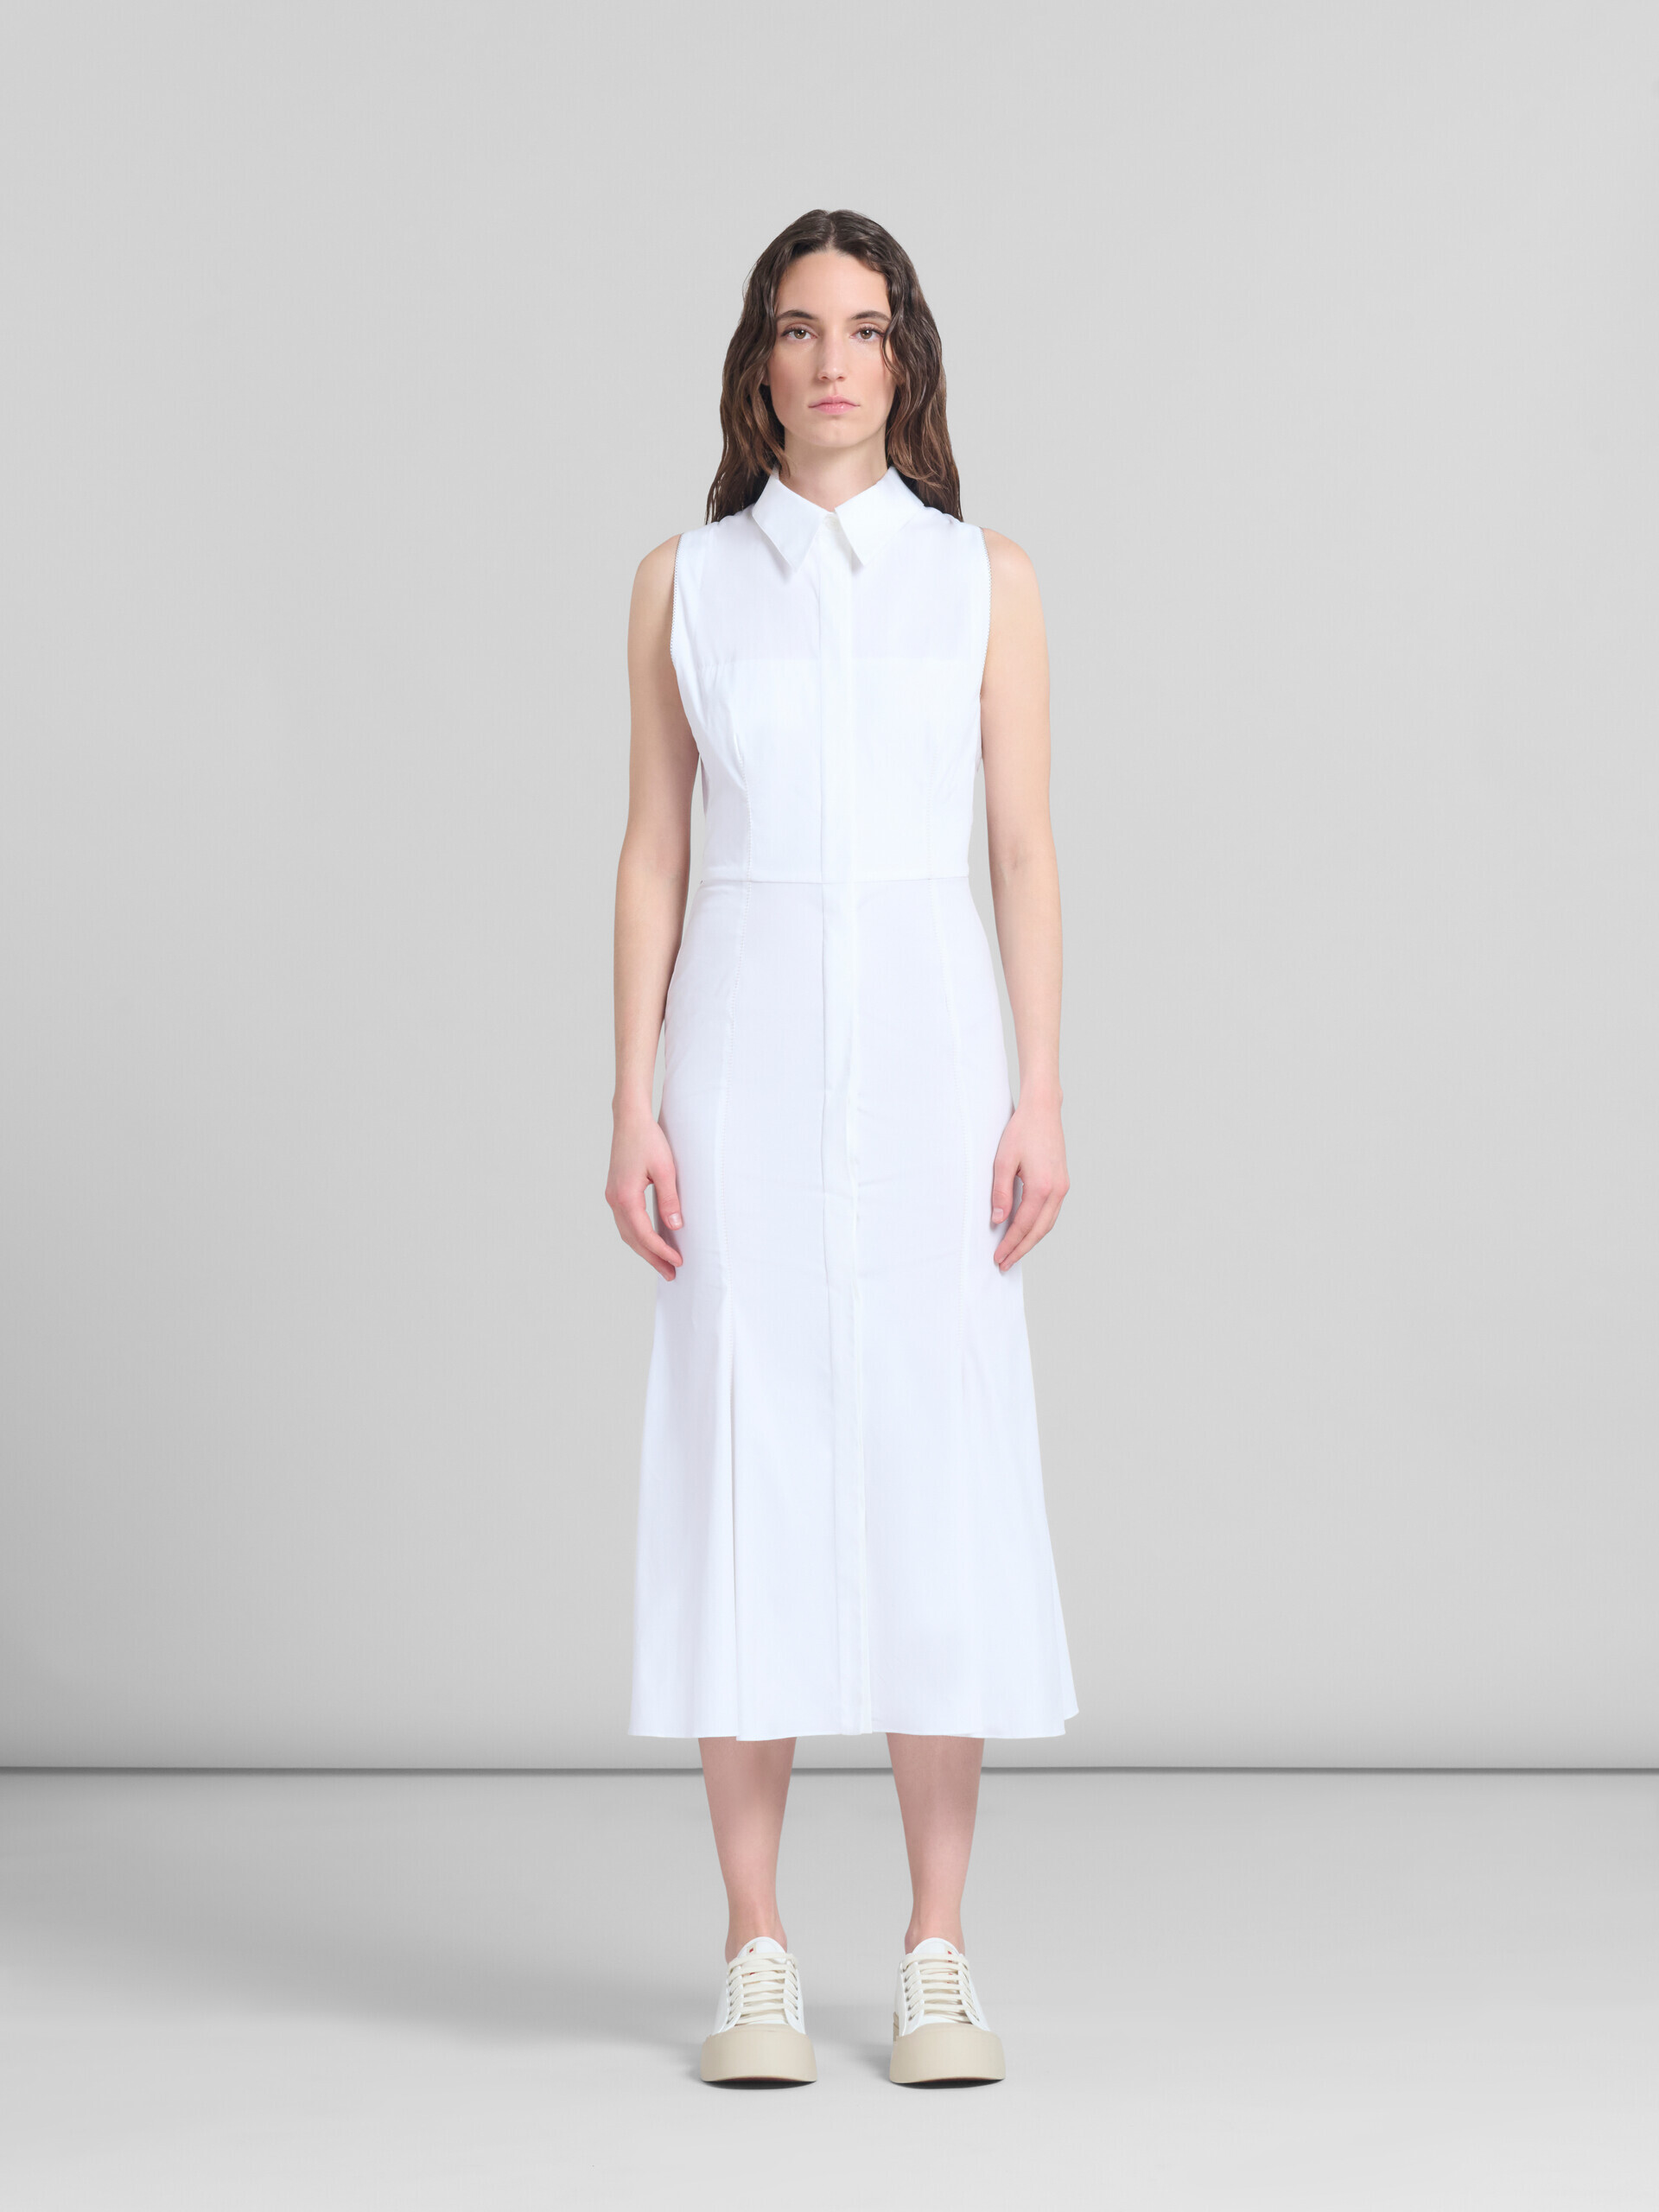 Robe sirène en coton organique blanc - Robes - Image 1